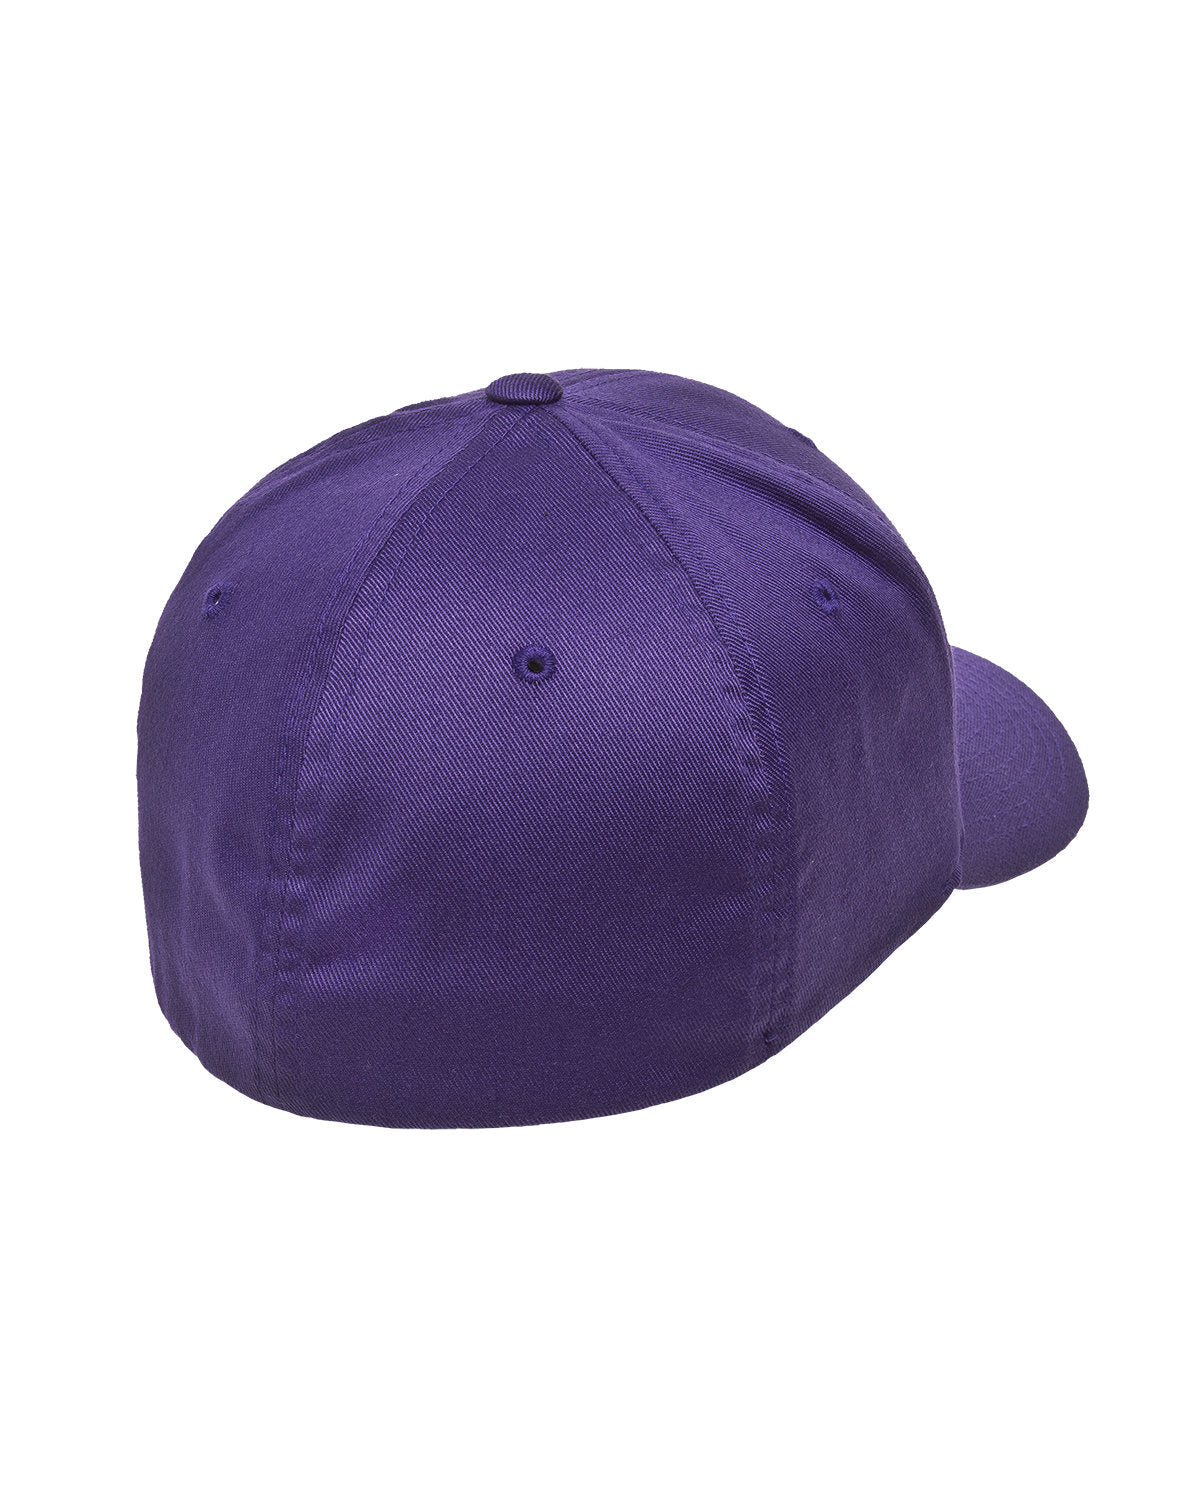 Get Custom Flexfit Wooly 6-Panel 6277 Cap for an Flexfit Amazing Price Purple